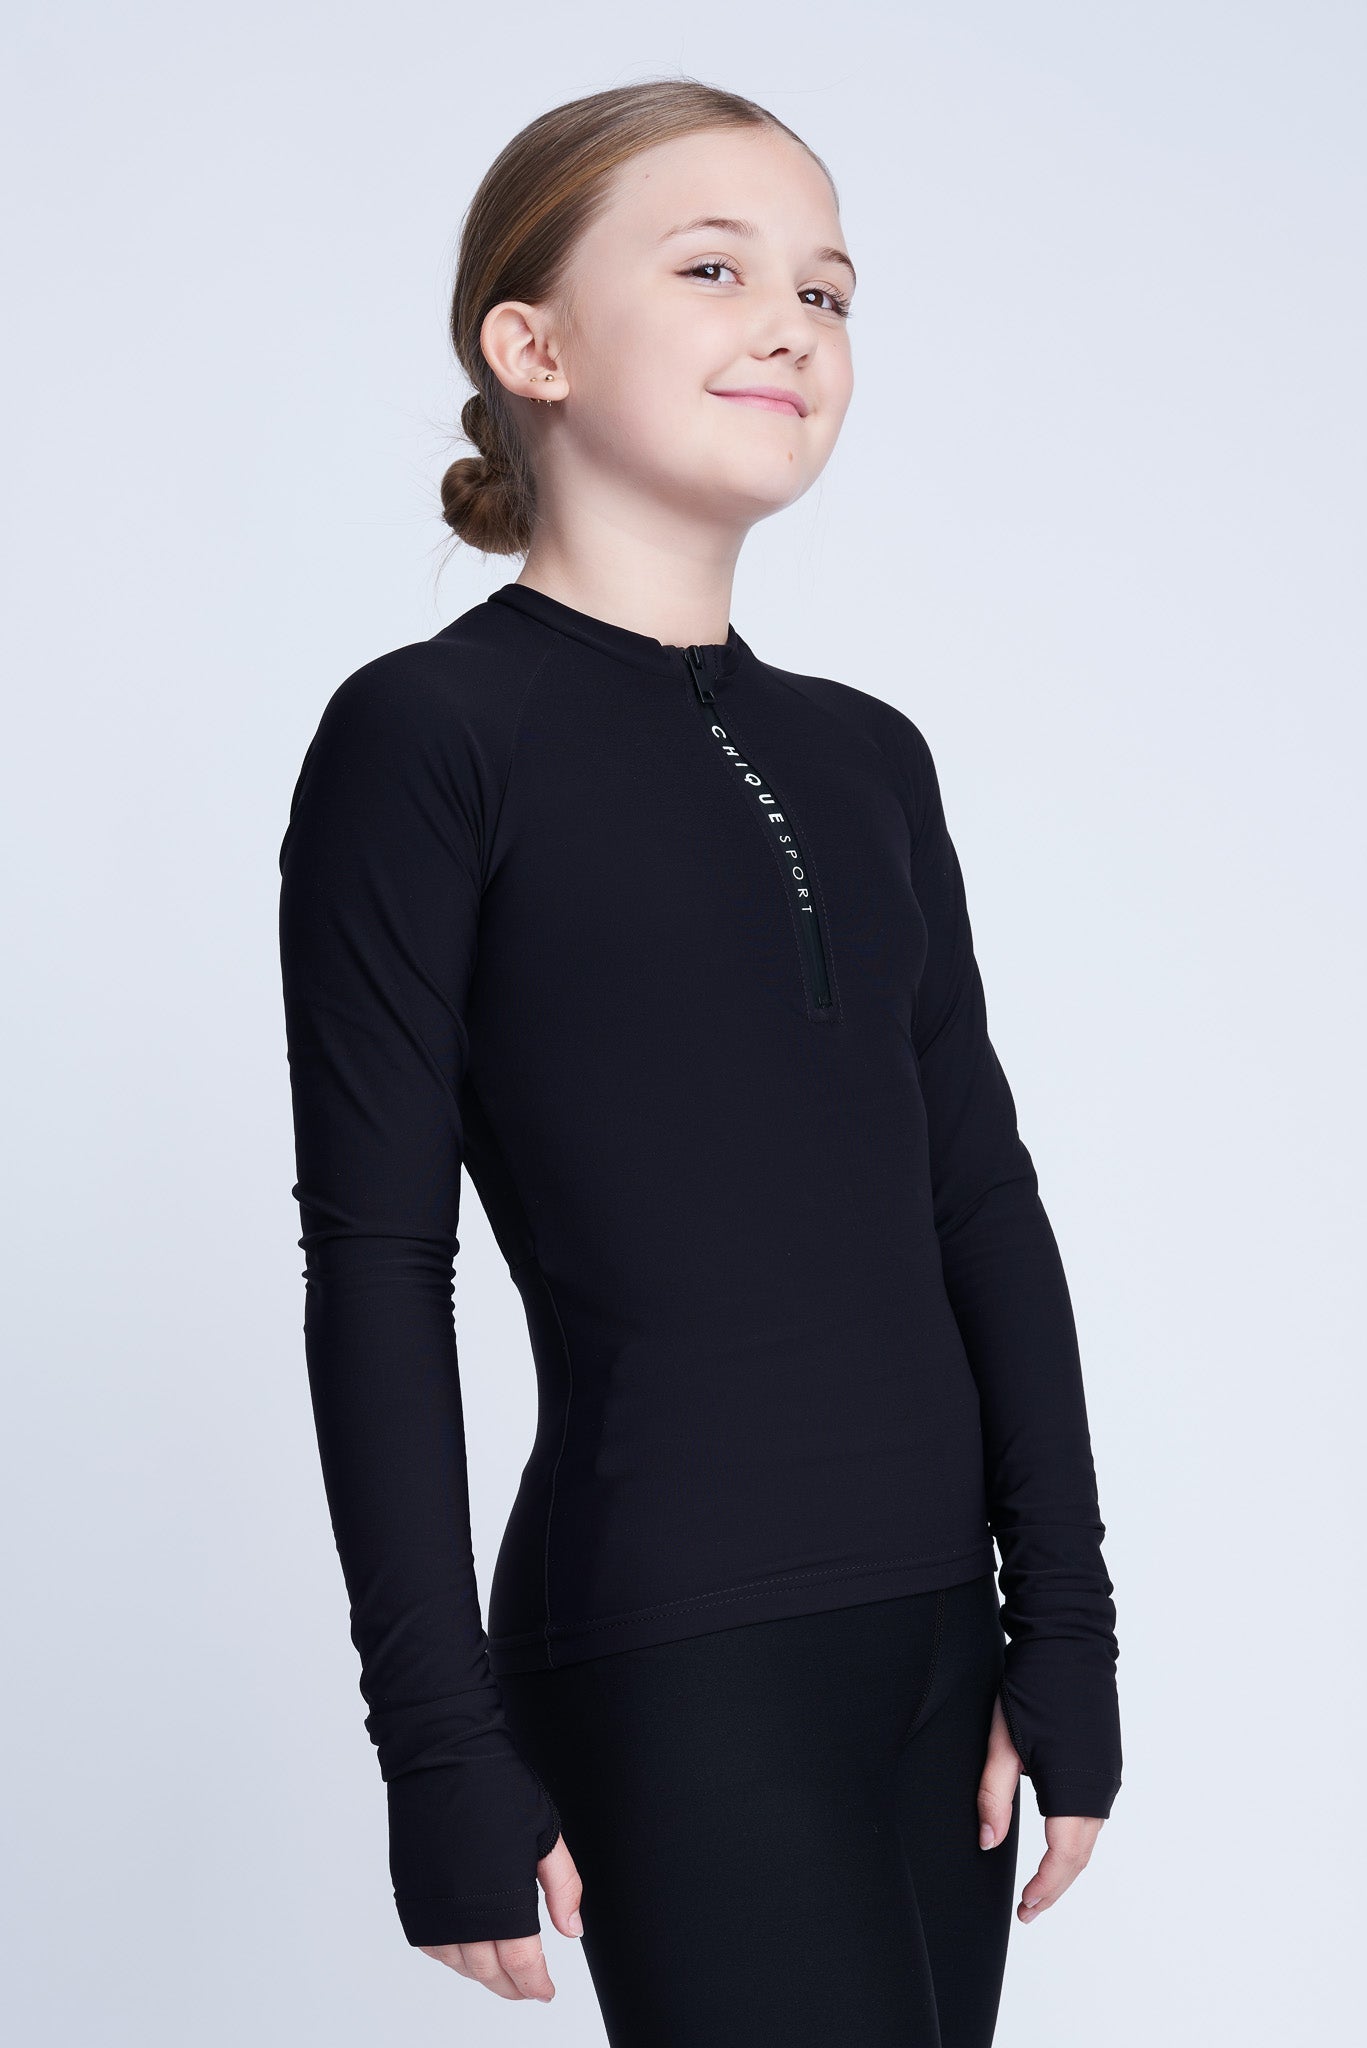 Girl's Figure Skating Half-Zip Top in Black